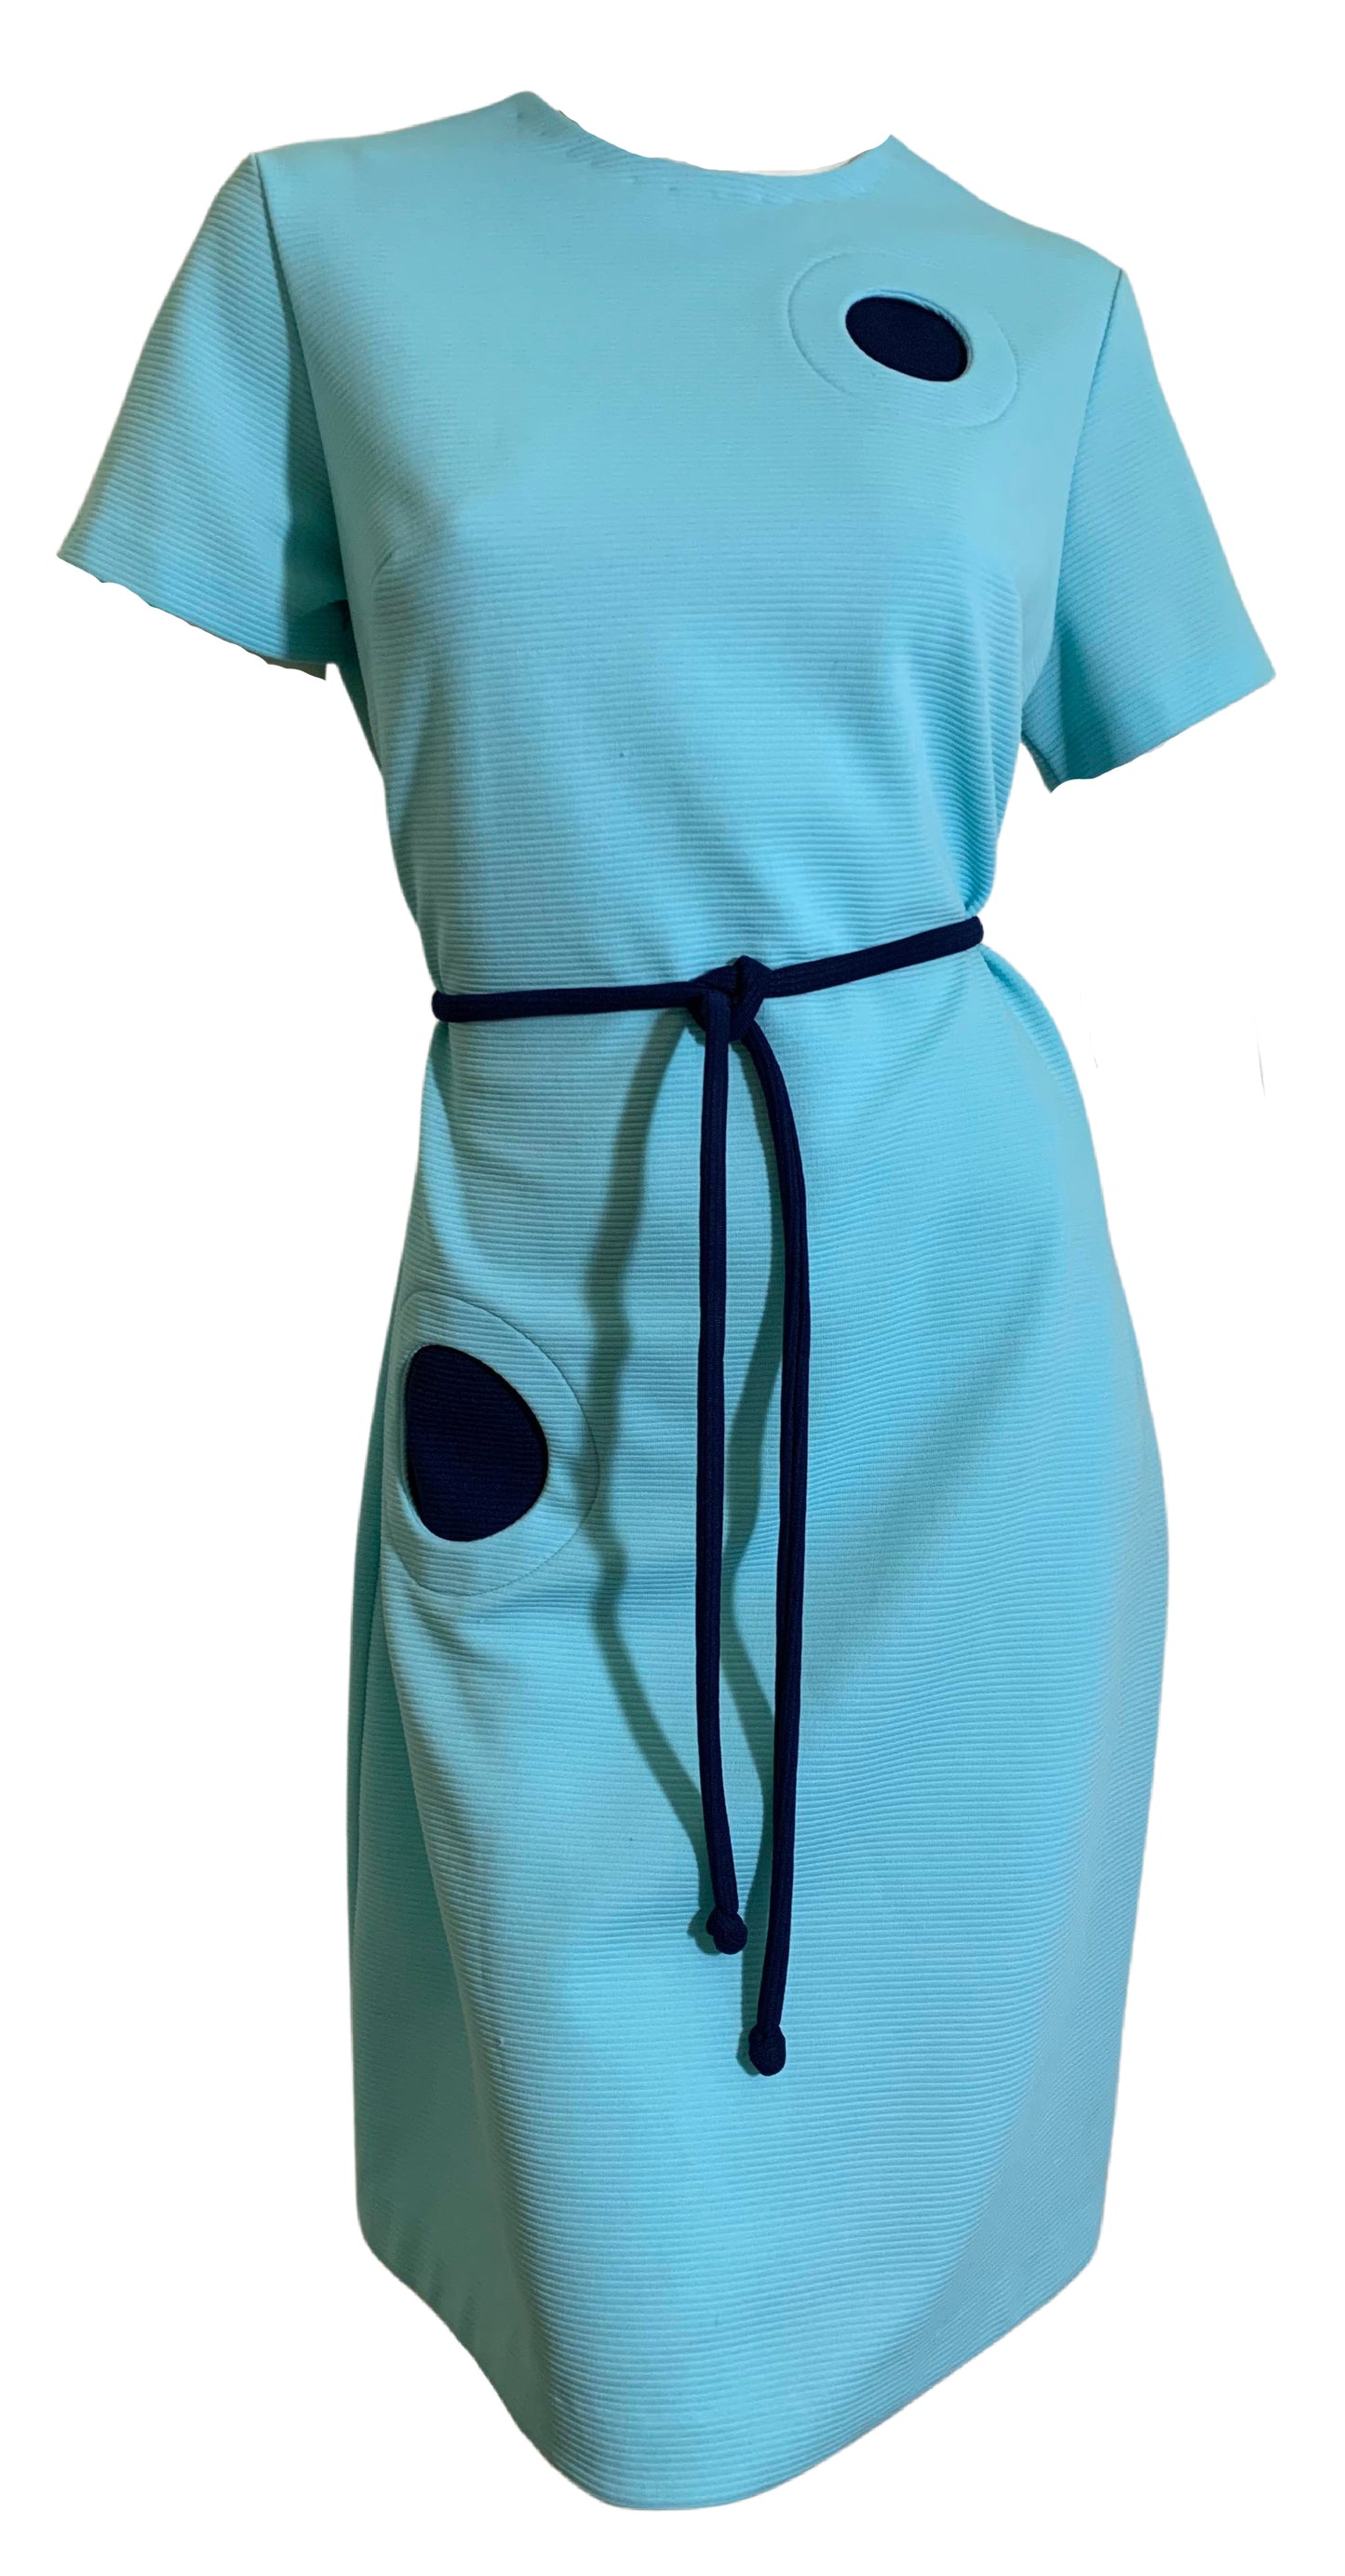 Mod Layered Dot Trimmed Blue Belted Shift Dress circa 1960s